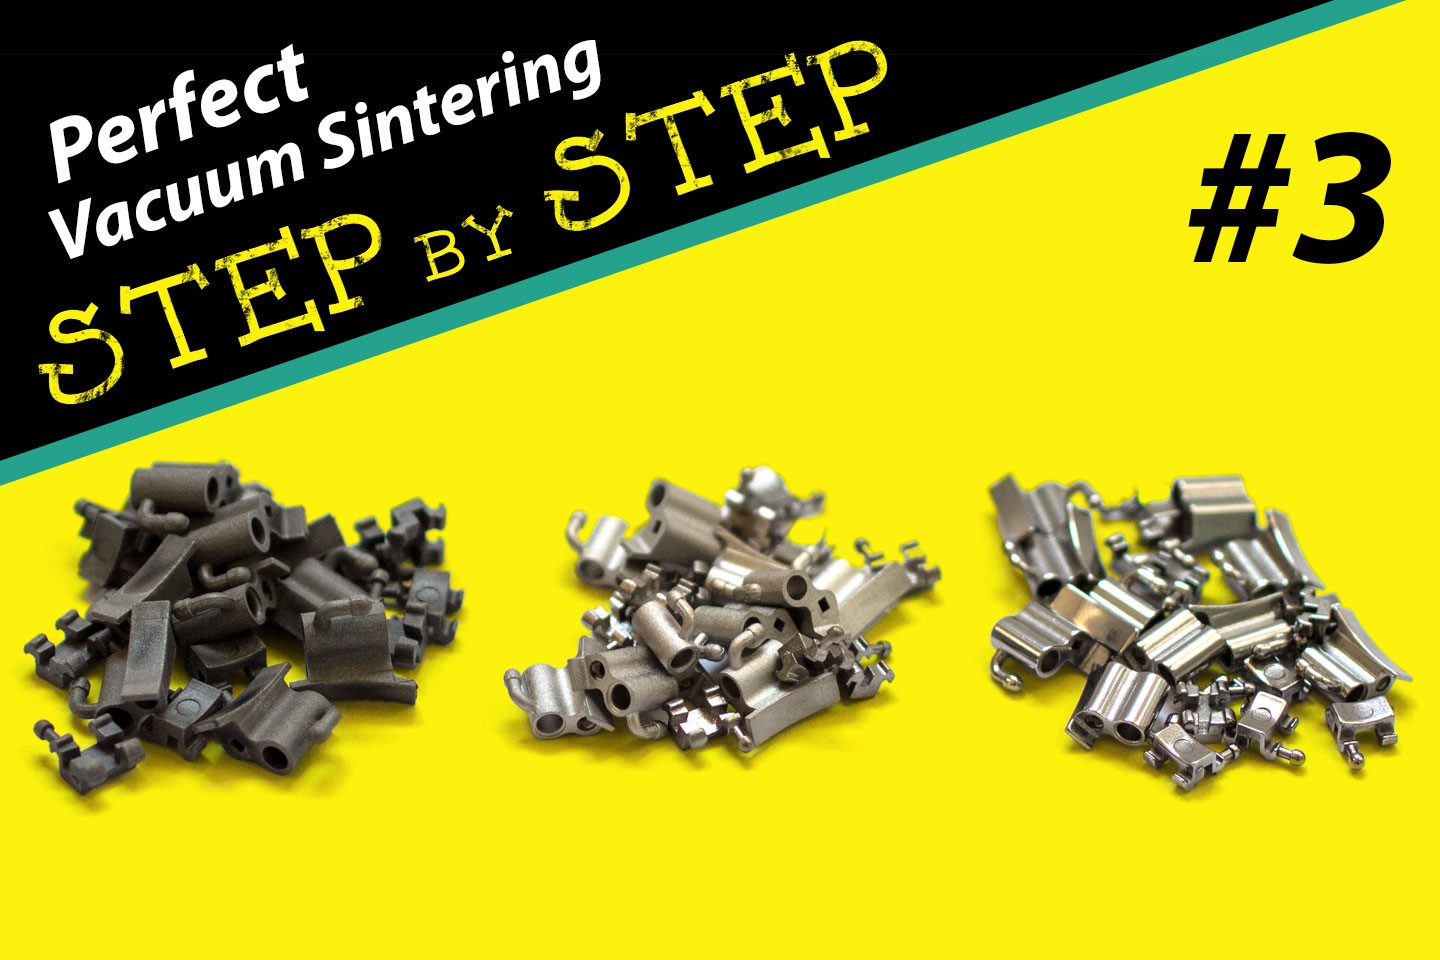 Perfect vacuum sintering step by step [3/4]